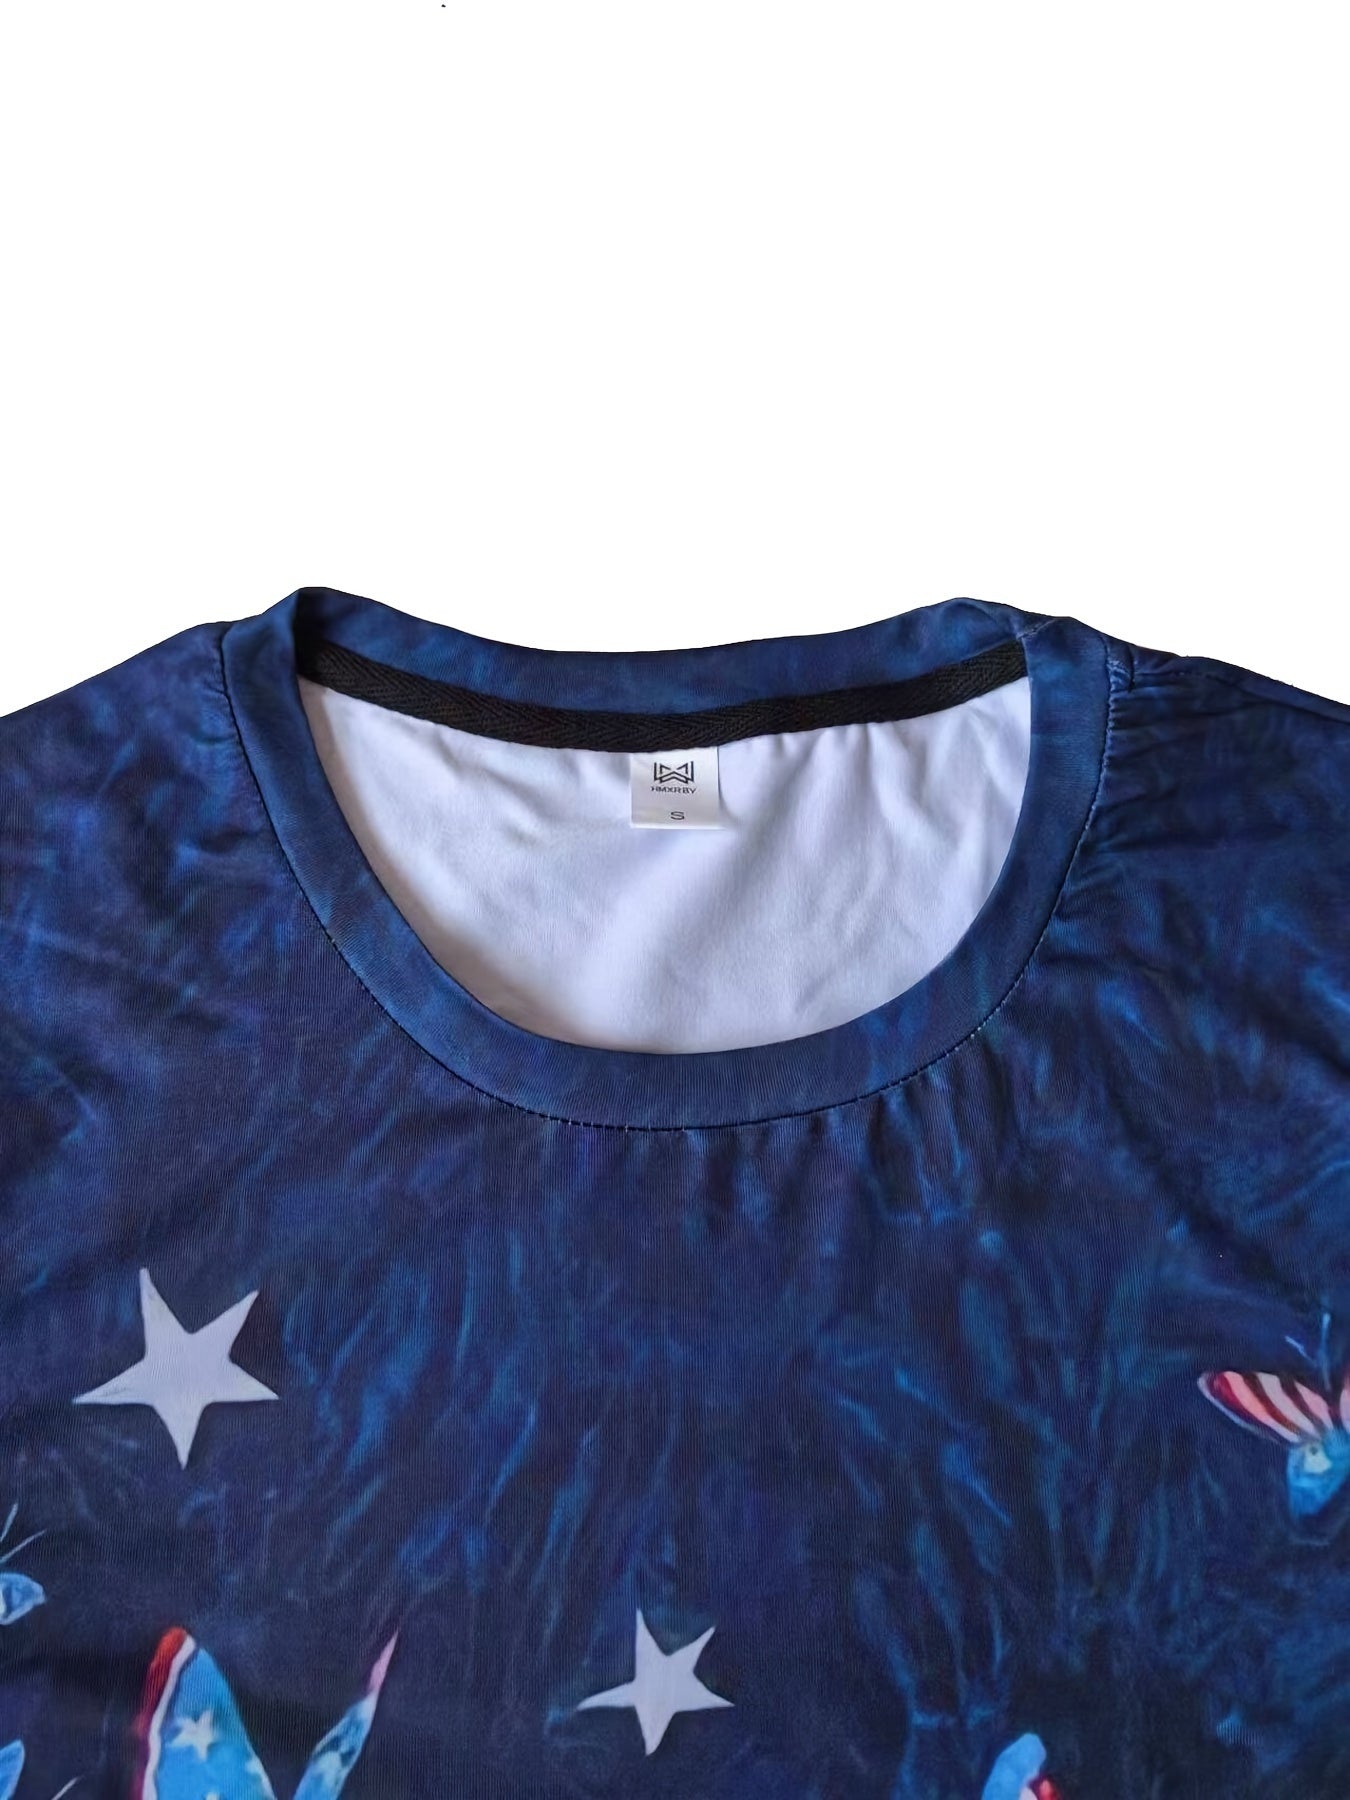 Flag Print Crew Neck Short Sleeve T-Shirt - Soft Slight Stretch, Casual Summer Daily Top